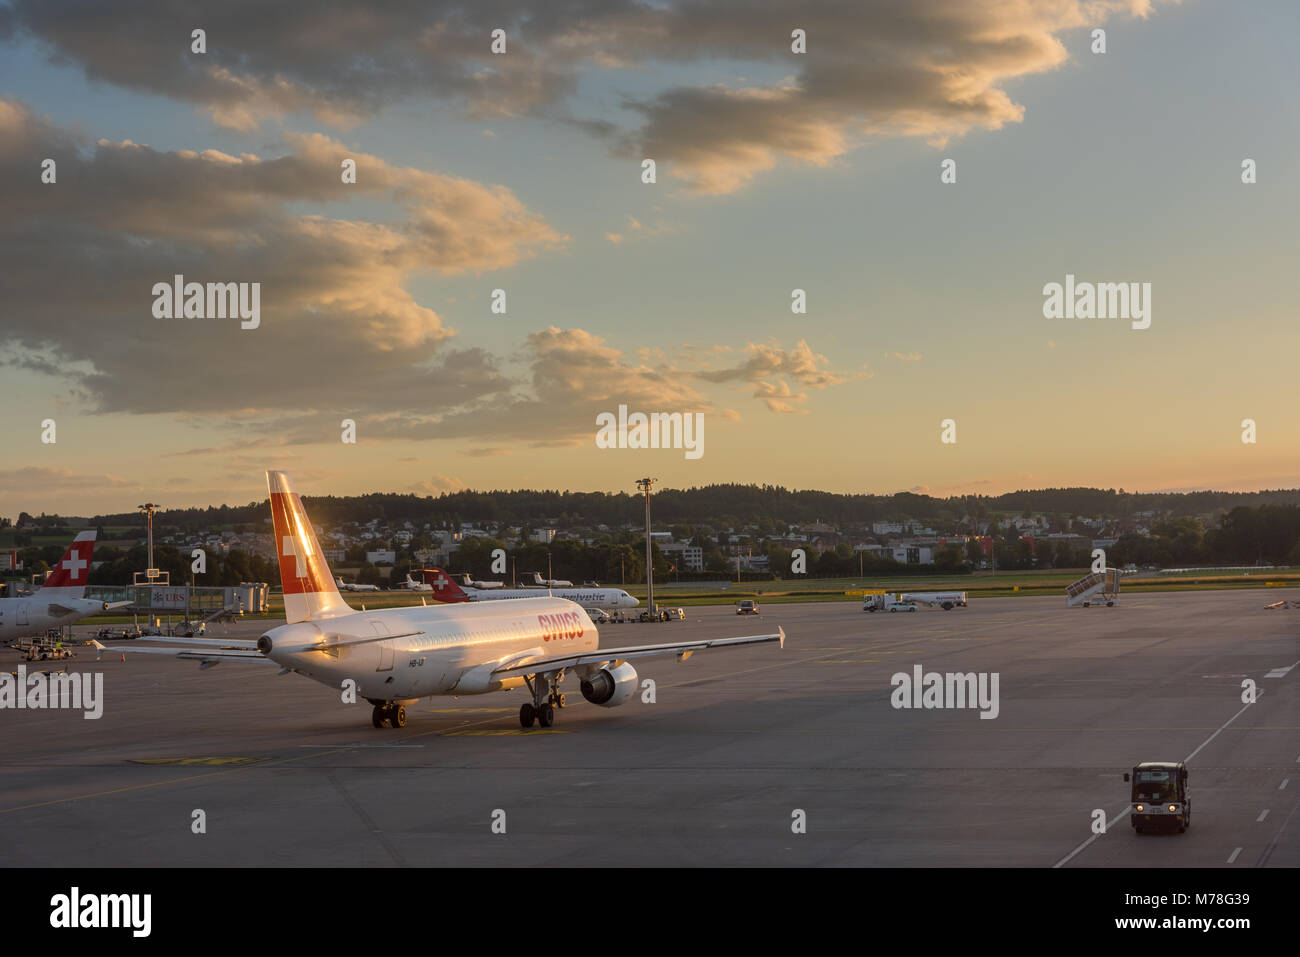 Flugzeug Abflug am Flughafen Zürich bei Sonnenuntergang Stockfotografie -  Alamy